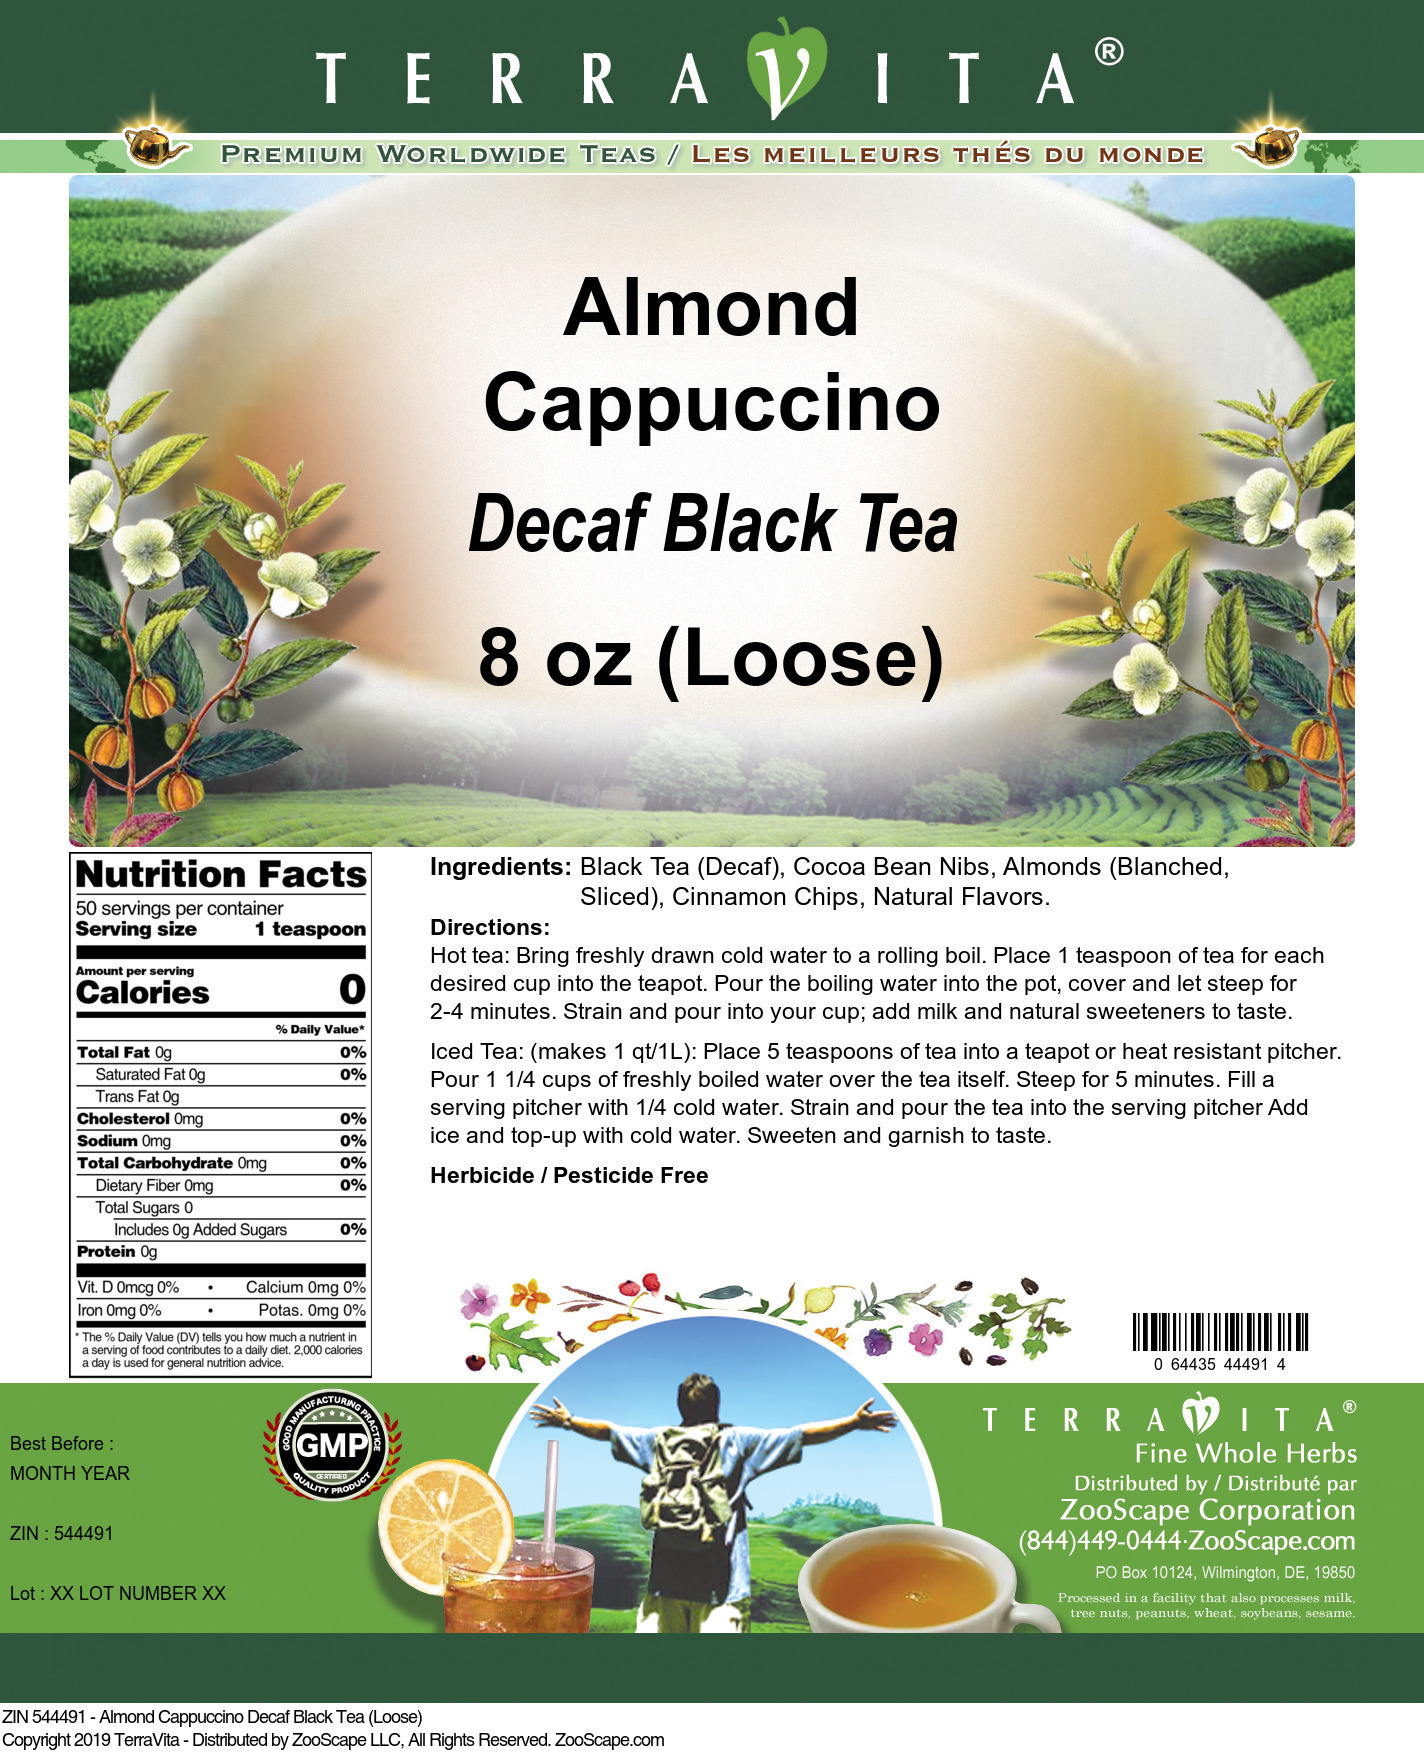 Almond Cappuccino Decaf Black Tea (Loose) - Label